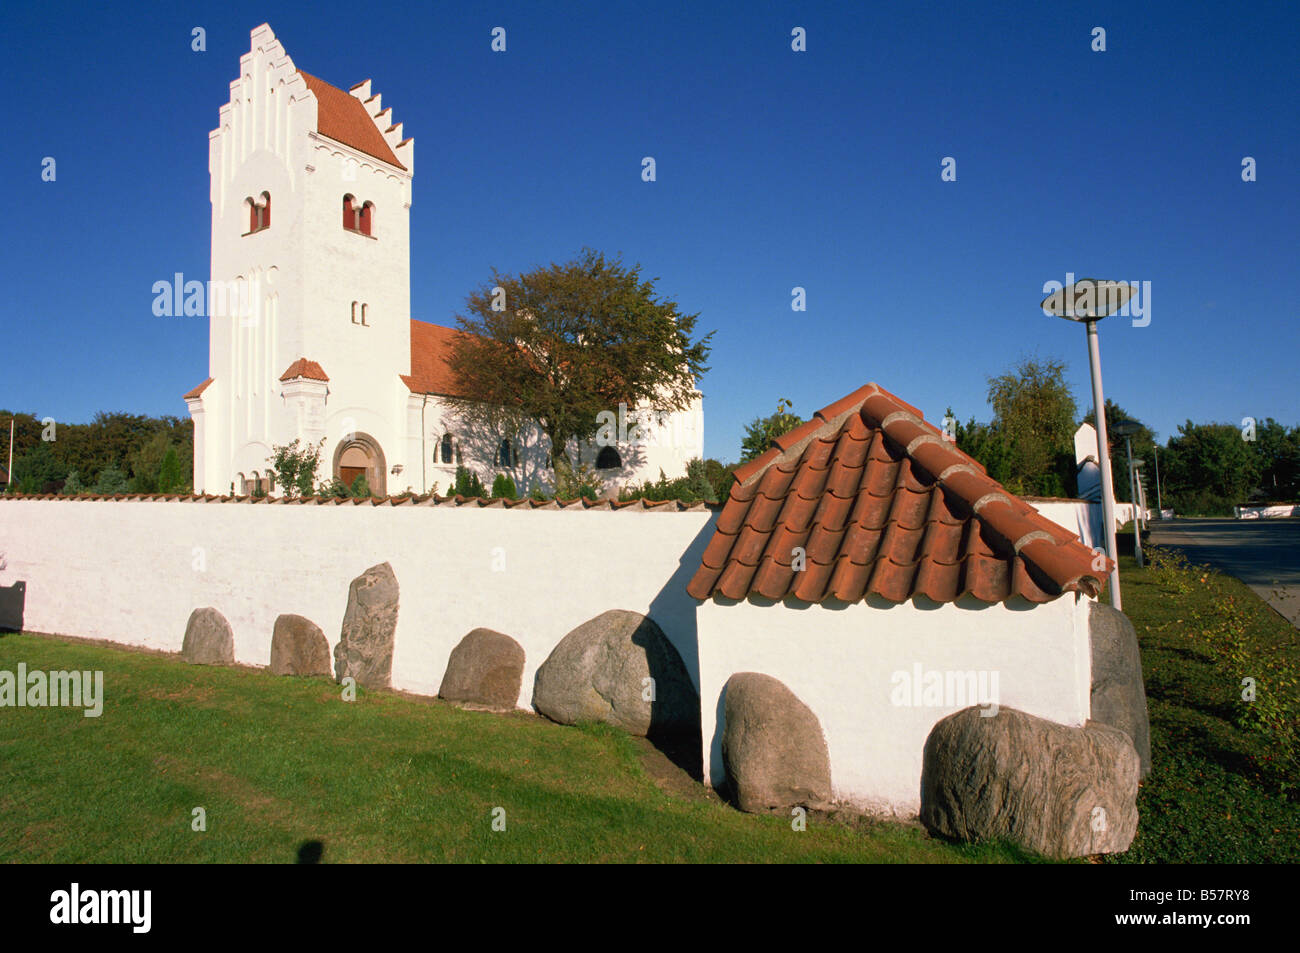 Typical country style church Vodskov near Alborg Denmark Scandinavia Europe Stock Photo